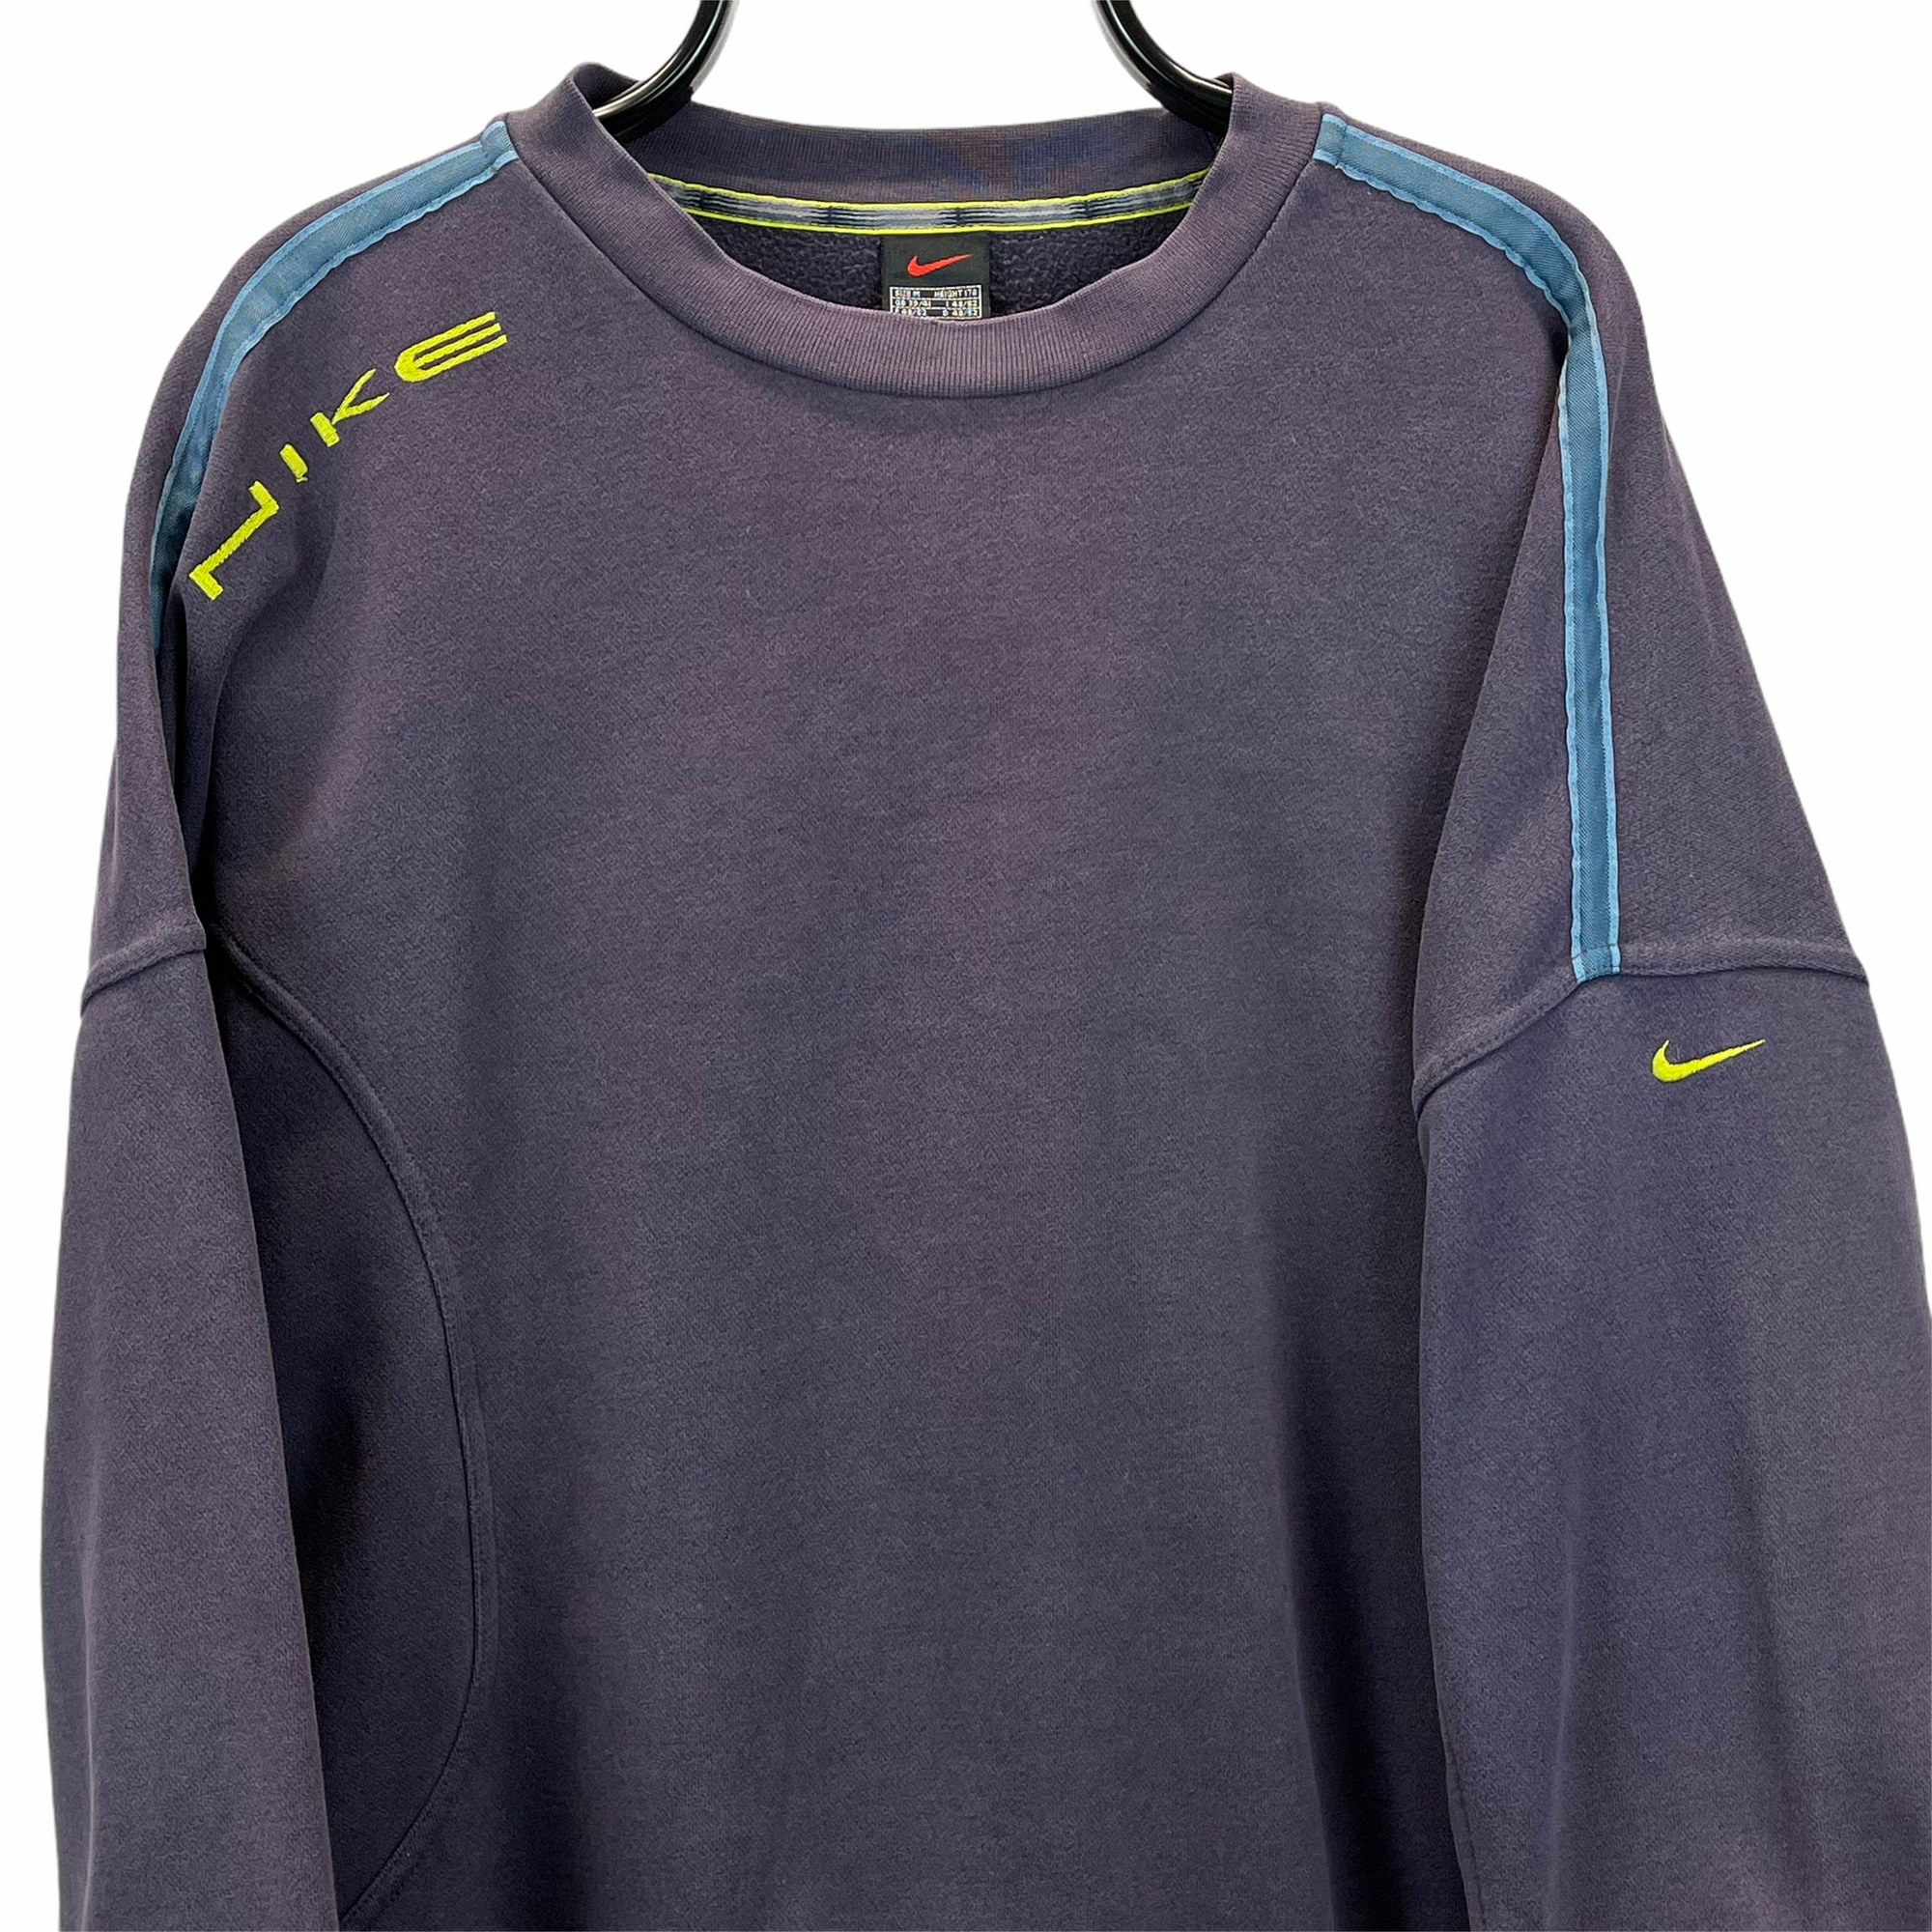 Vintage 90s Nike Spellout Sweatshirt in Plum - Men's Large/Women's XL